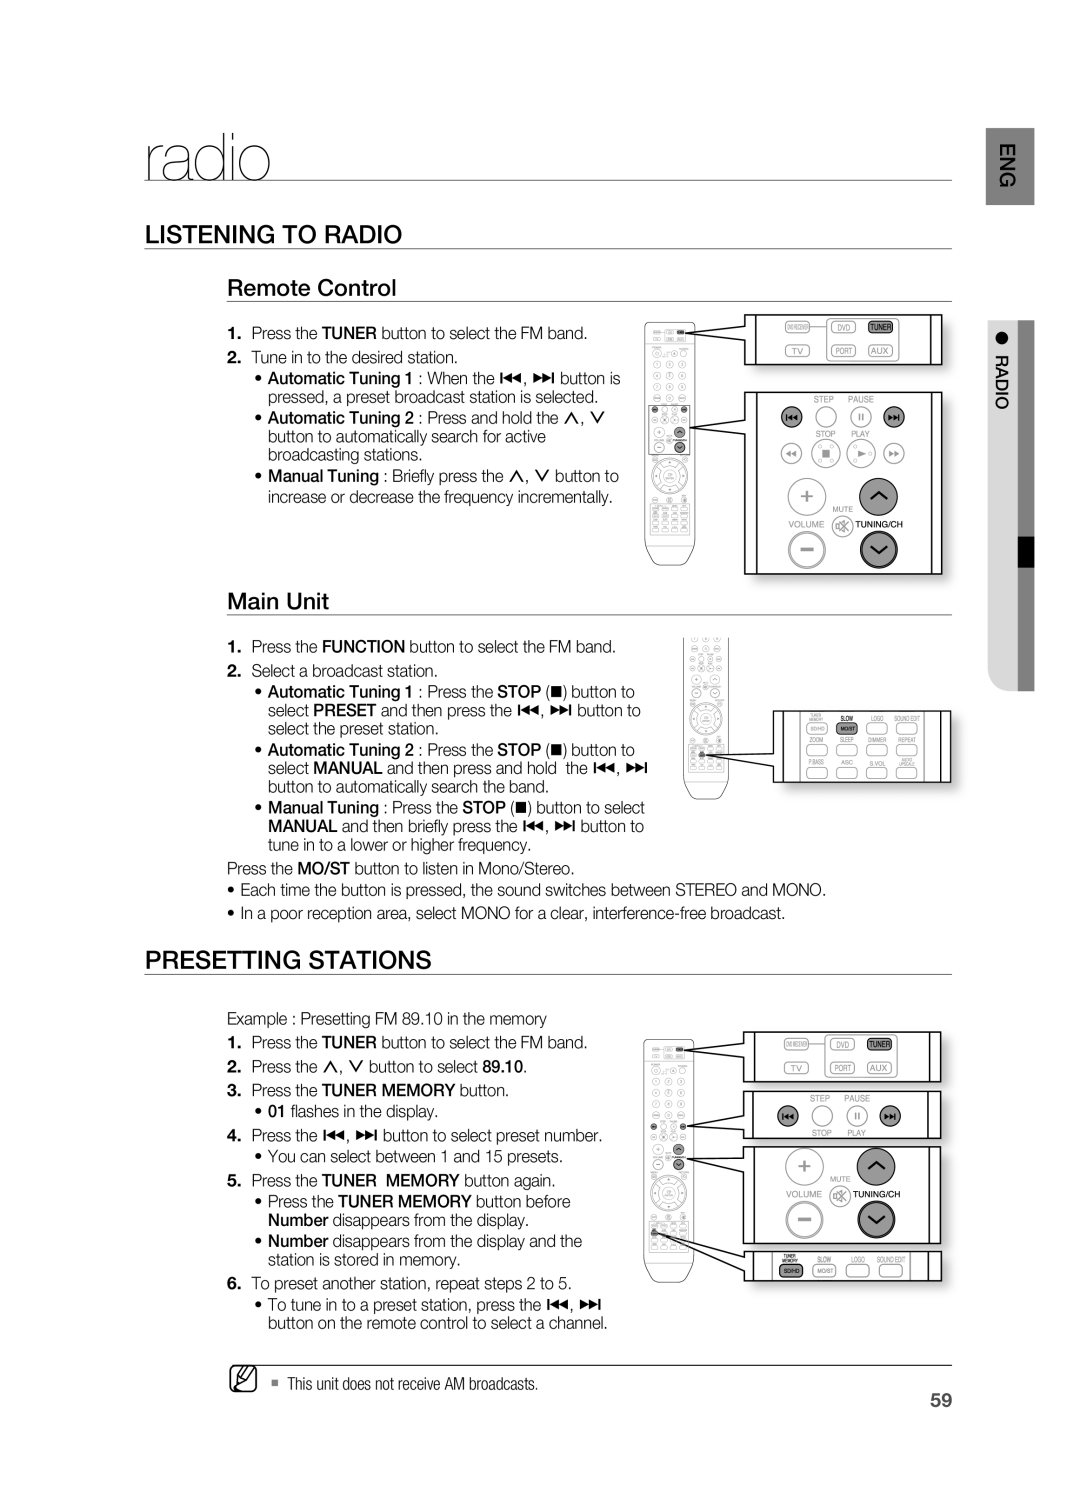 Samsung HT-TX715 user manual radio, LISTENING TO rADIO, PrESETTING STATIONS 